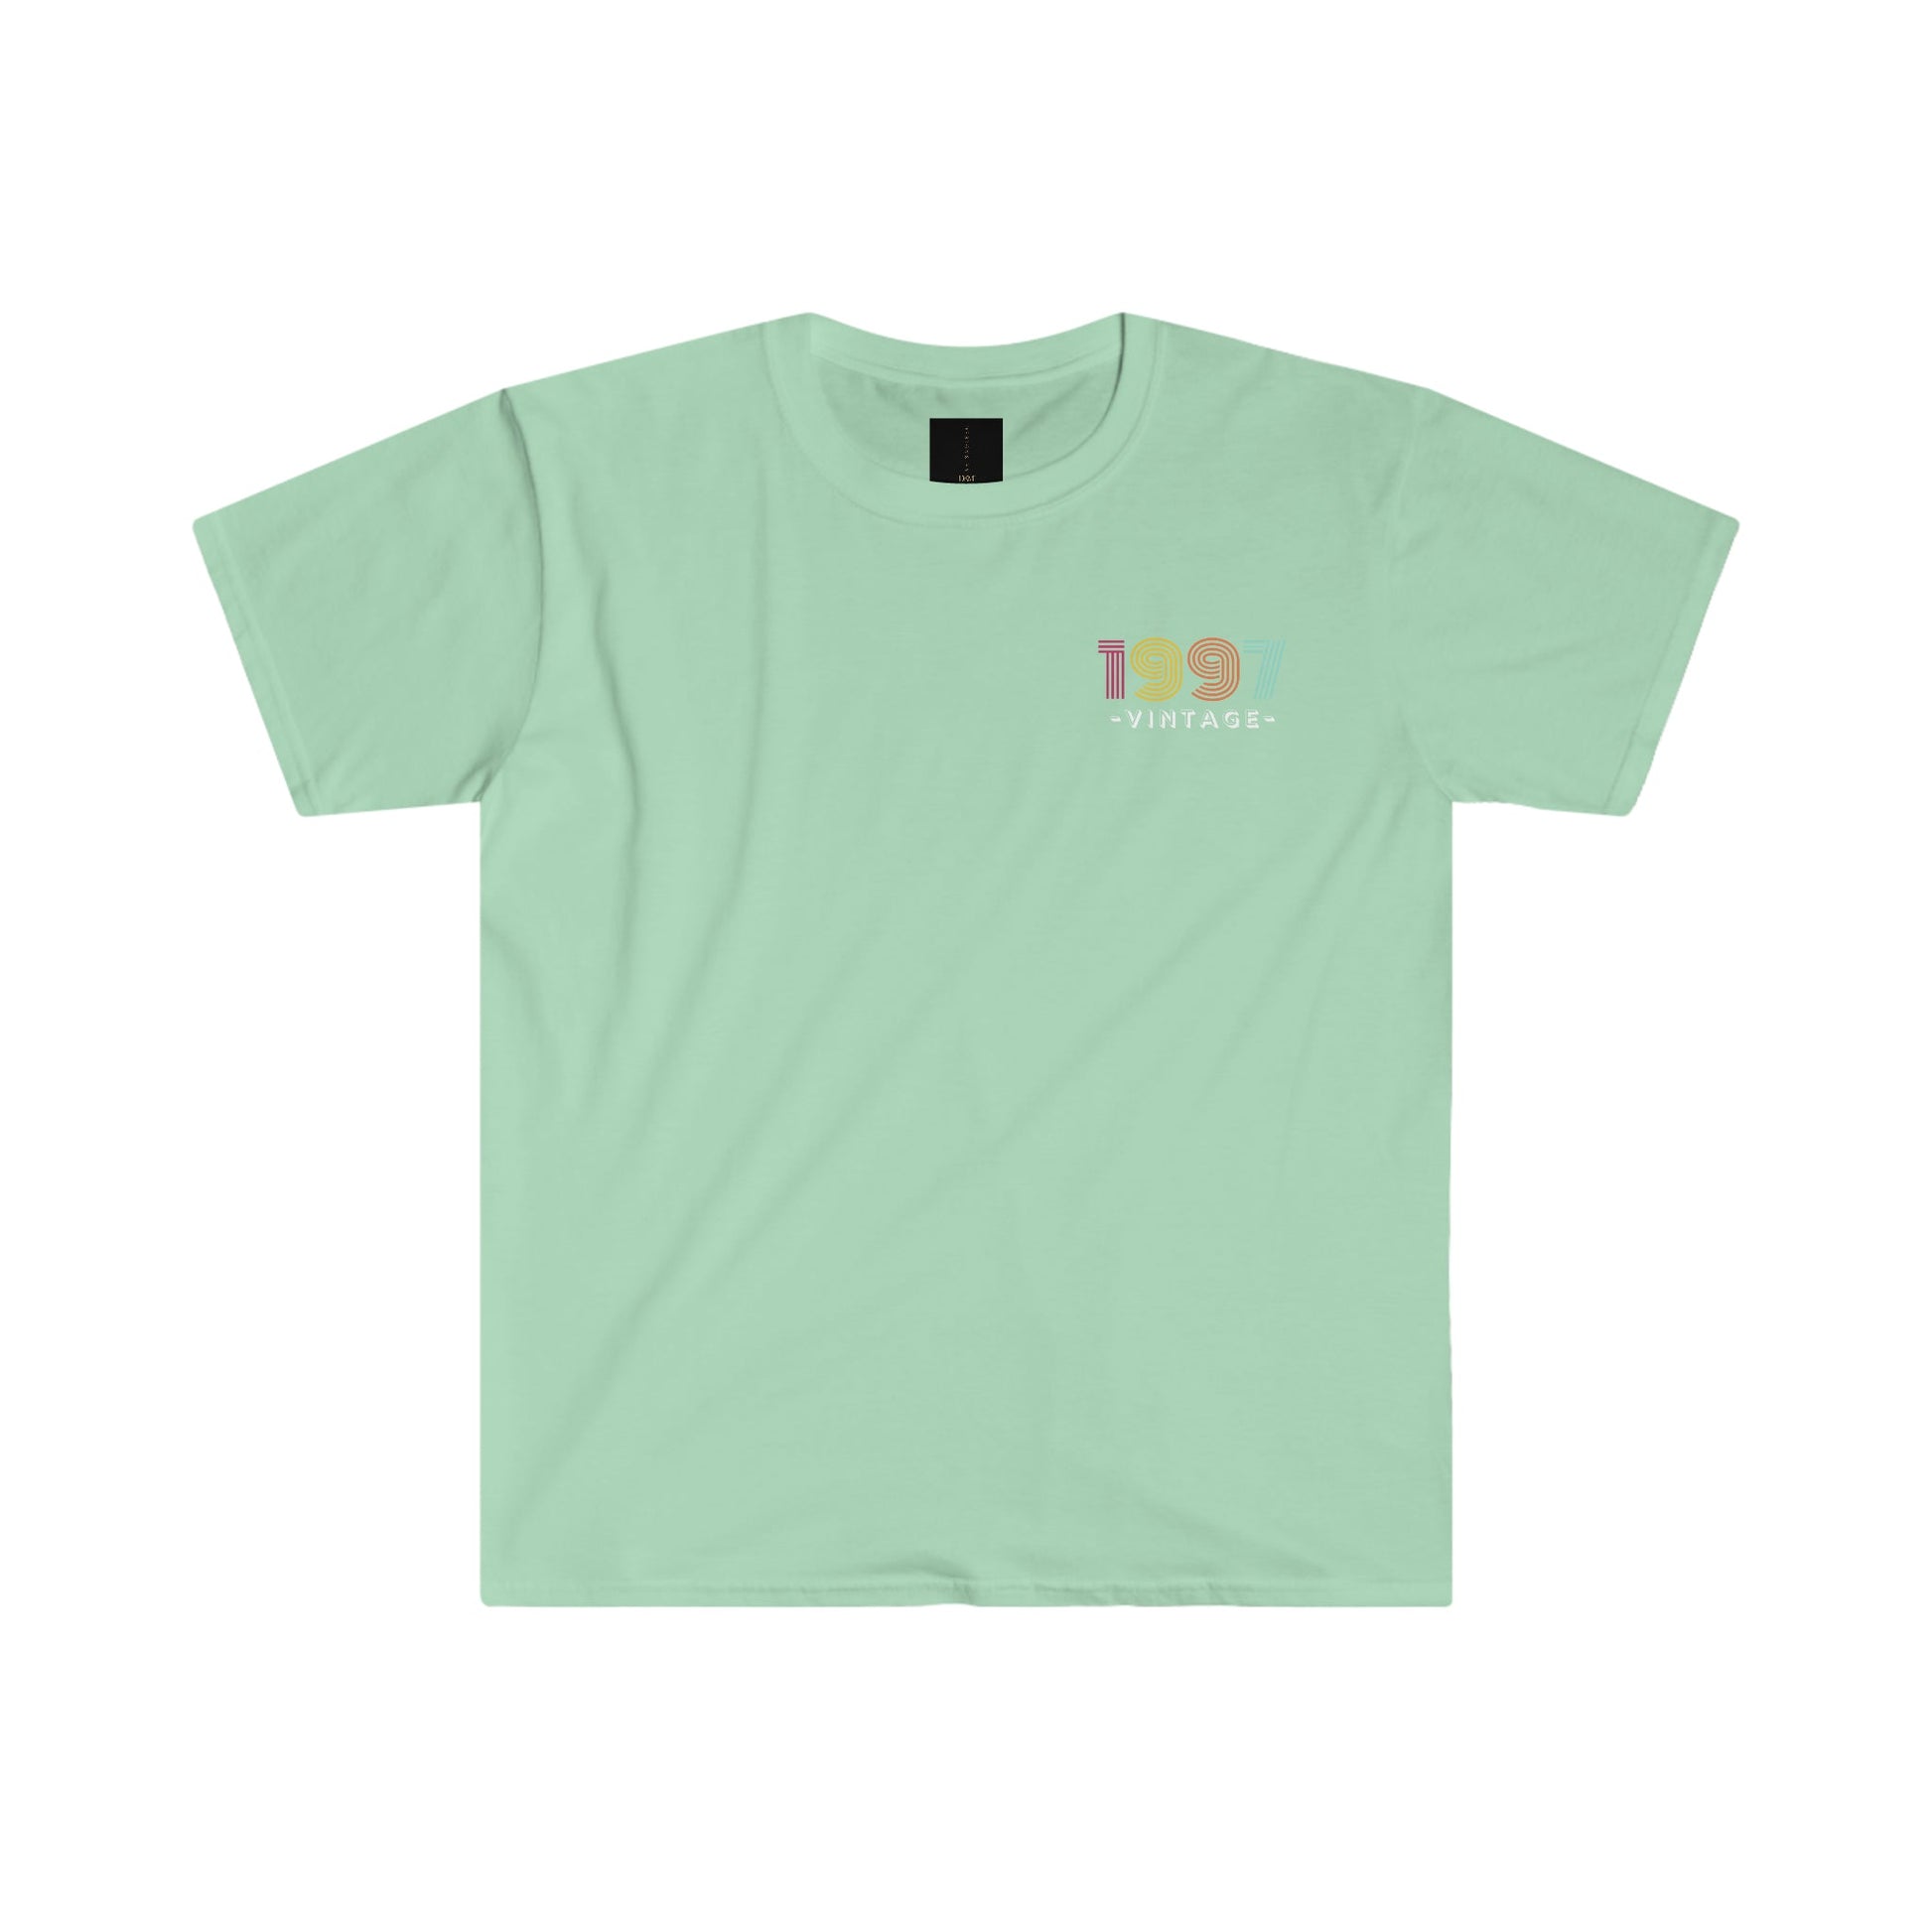 1997 Vintage, Unisex T-Shirt - Designs by DKMc